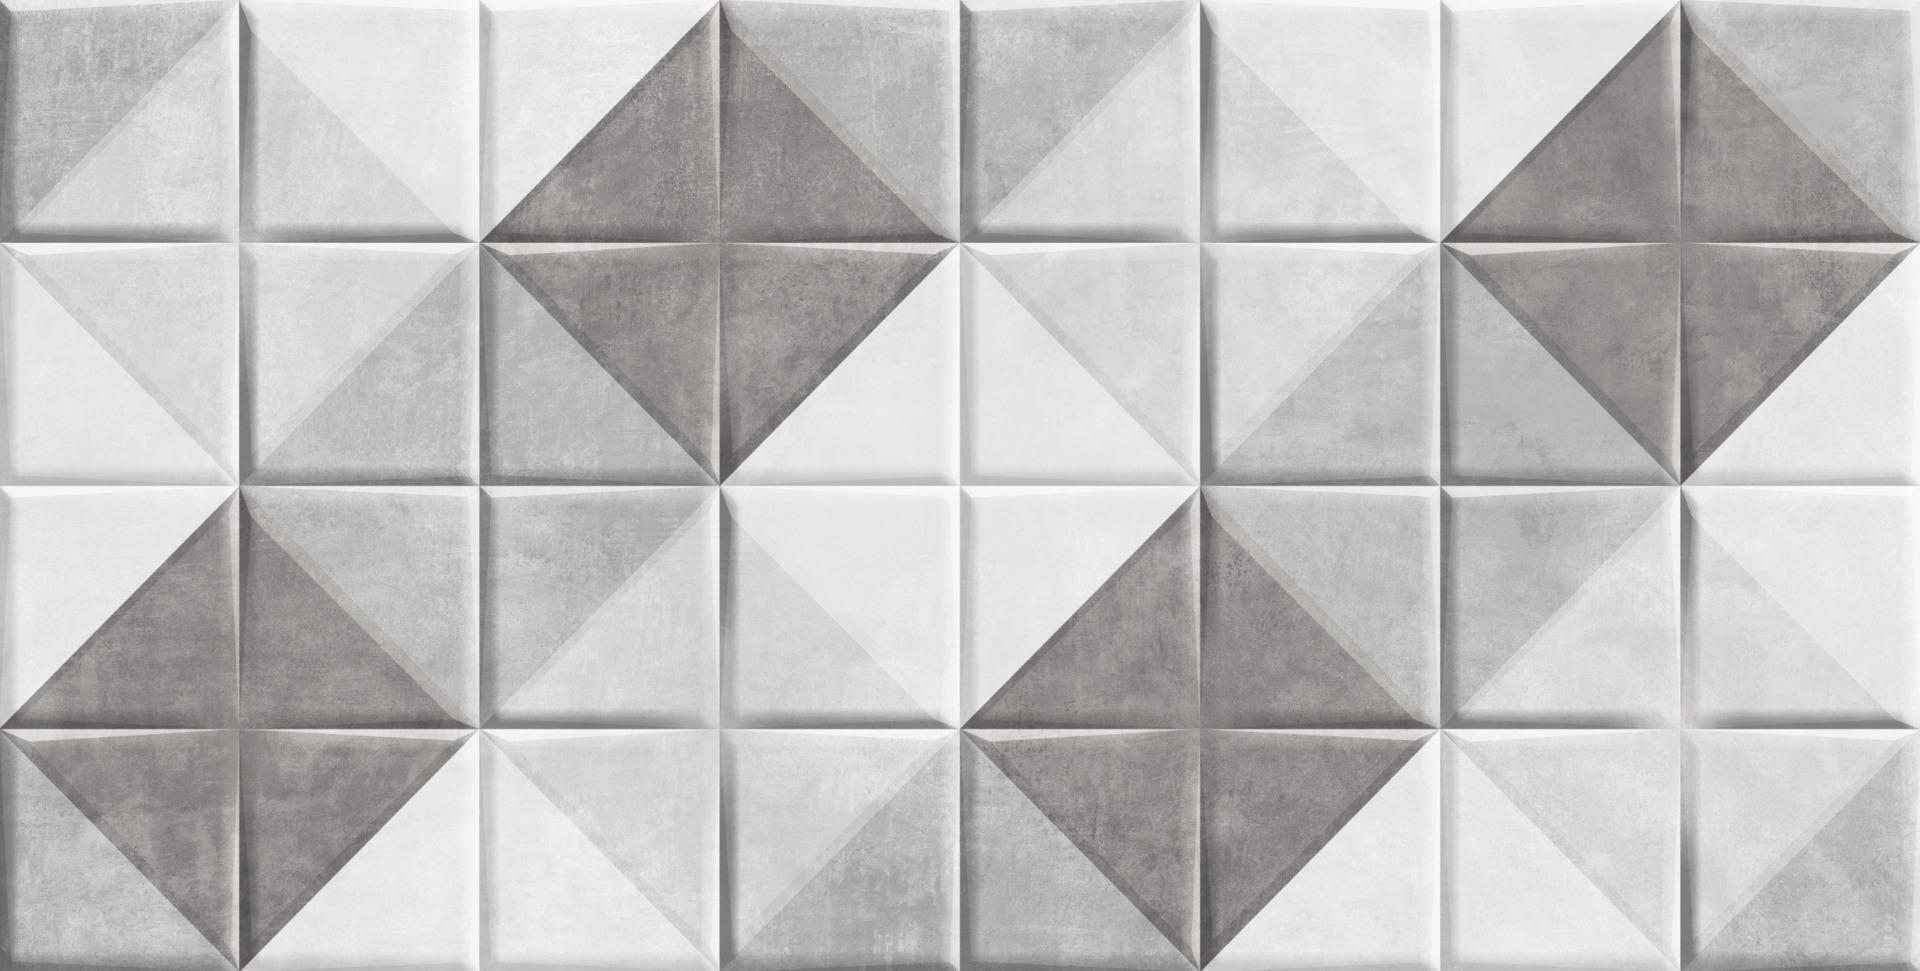 600x1200 MM Tiles for Bathroom Tiles, Living Room Tiles, Kitchen Tiles, Bedroom Tiles, Accent Tiles, Automotive Tiles, Bar/Restaurant, Commercial/Office